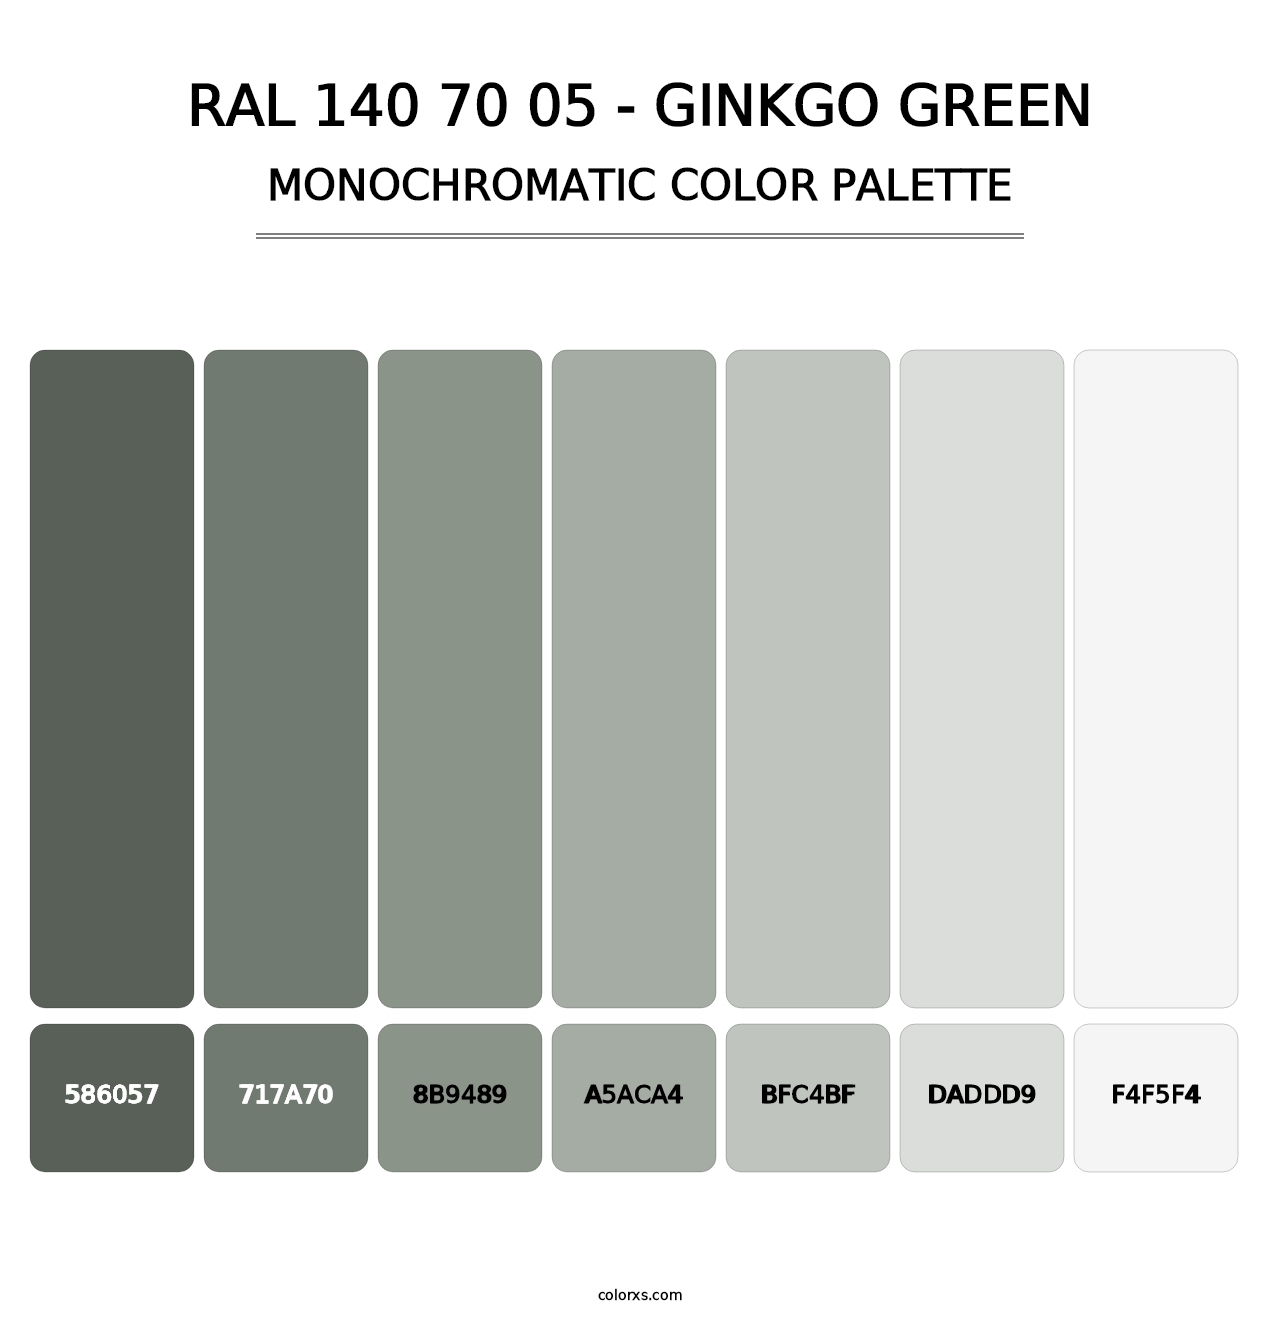 RAL 140 70 05 - Ginkgo Green - Monochromatic Color Palette